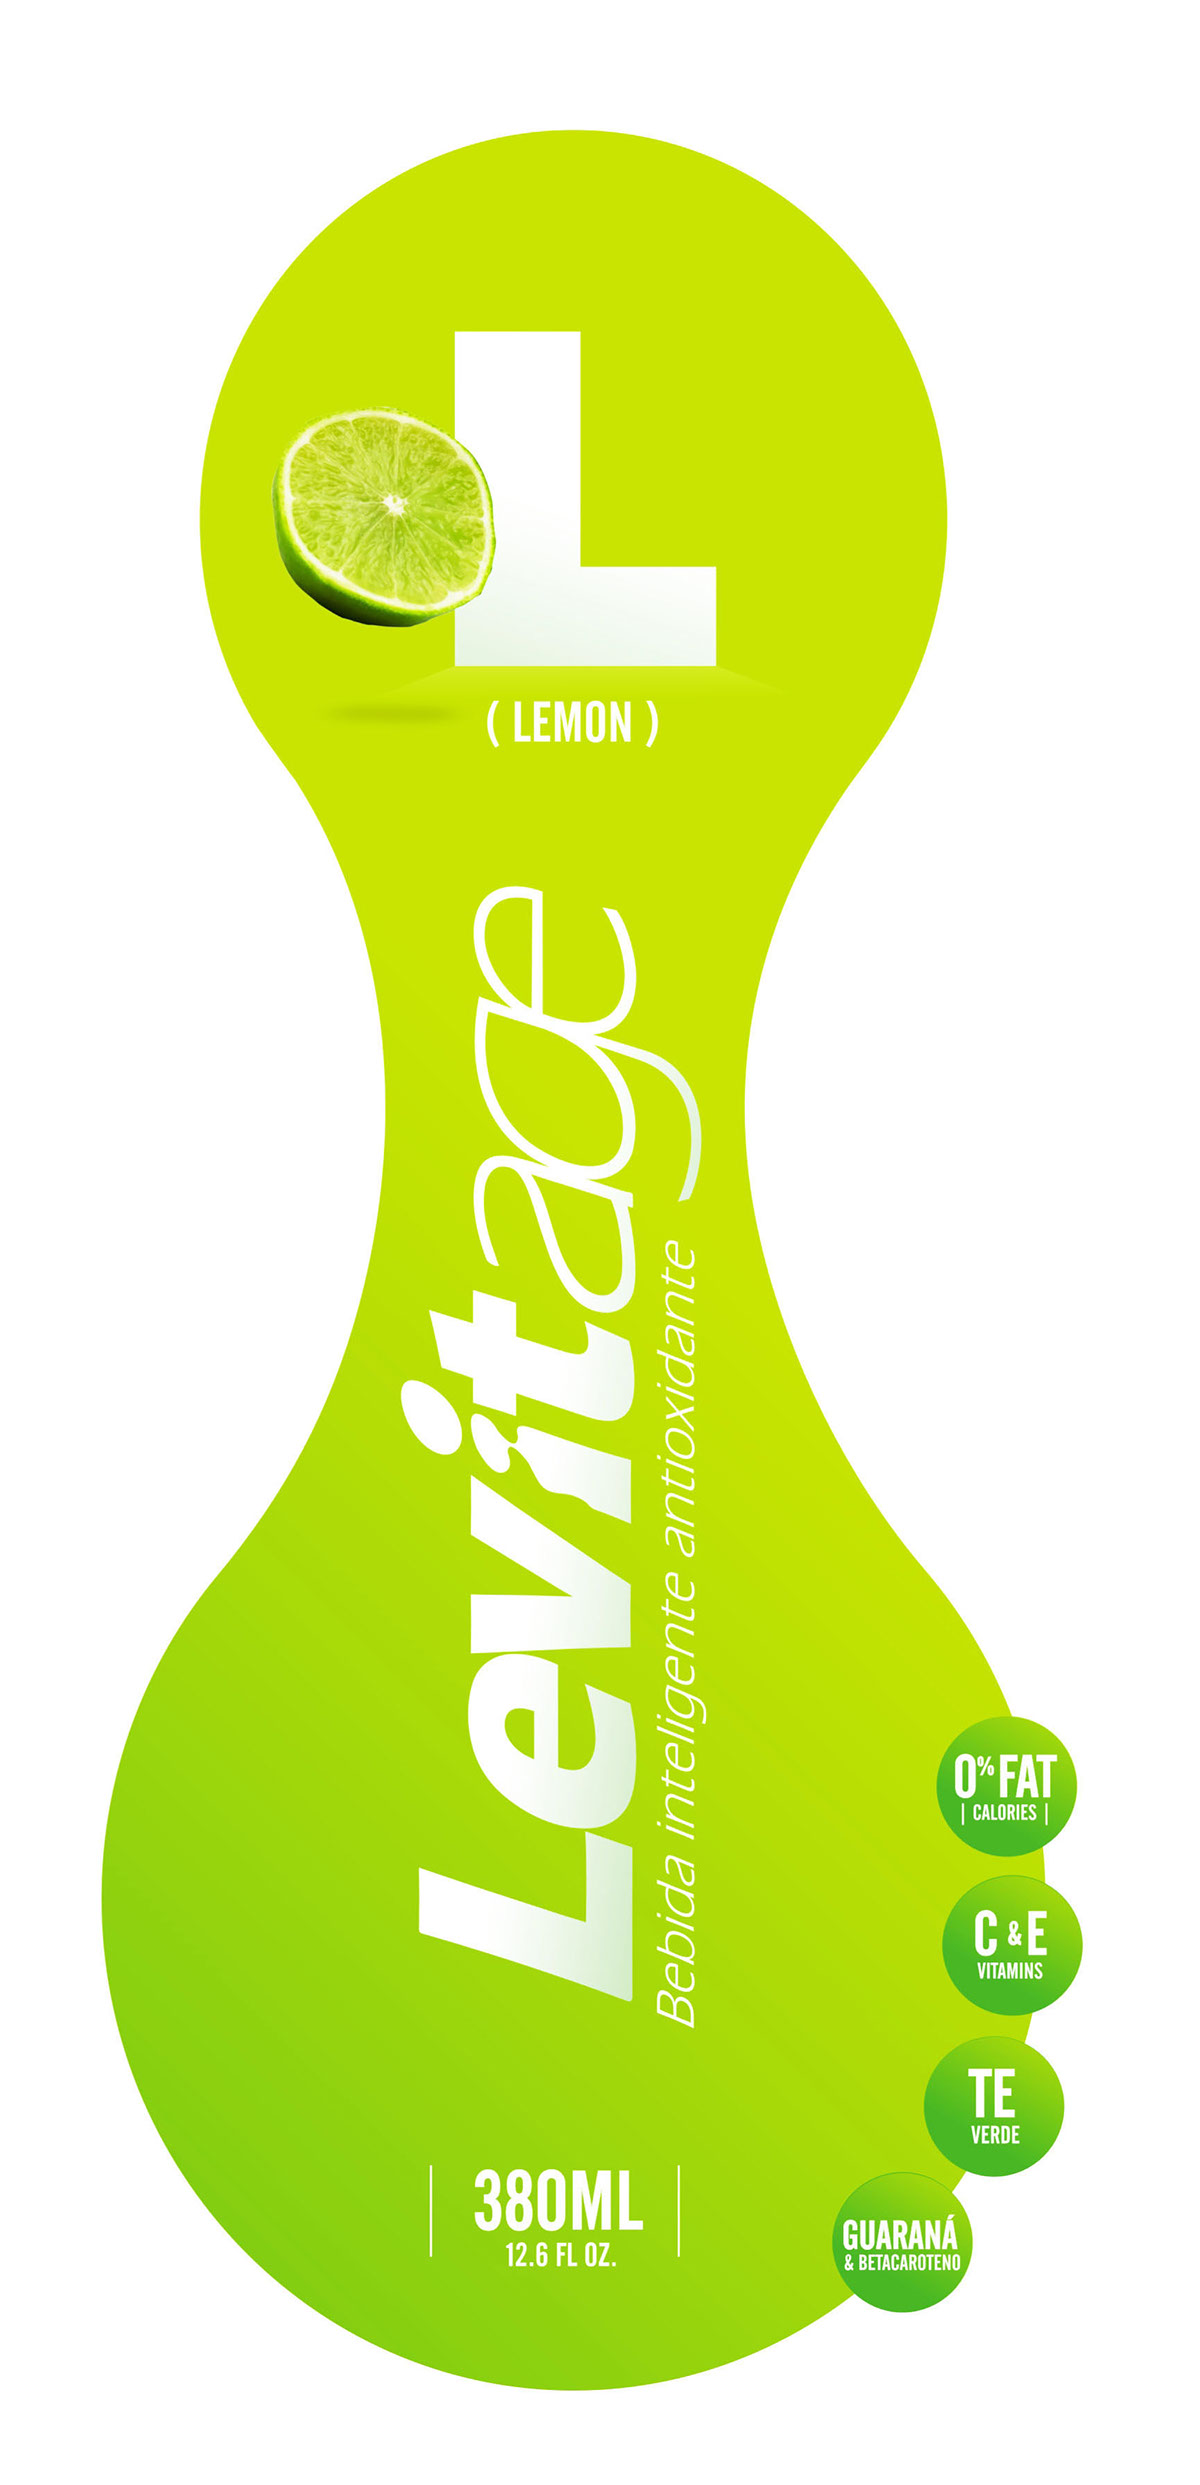 levitage drinks energydrink energy fruits brand logo medellin colombia tasconpublicidad beverage bebida